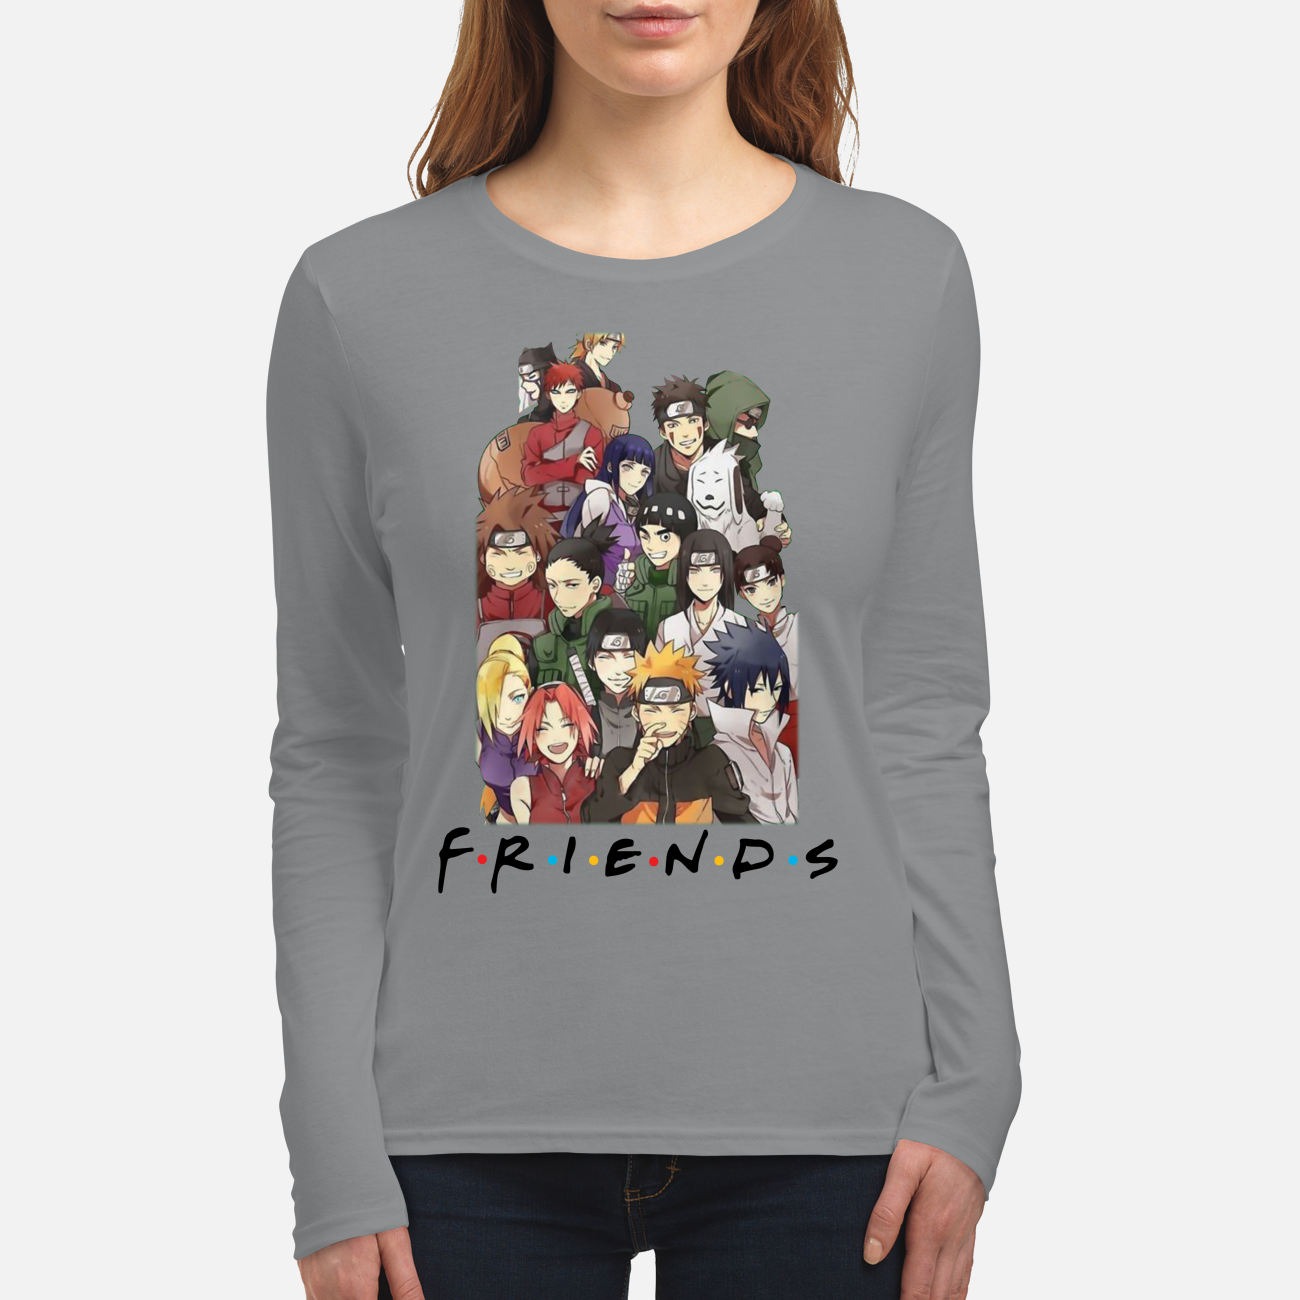 Naruto movie friends women's long sleeved shirt